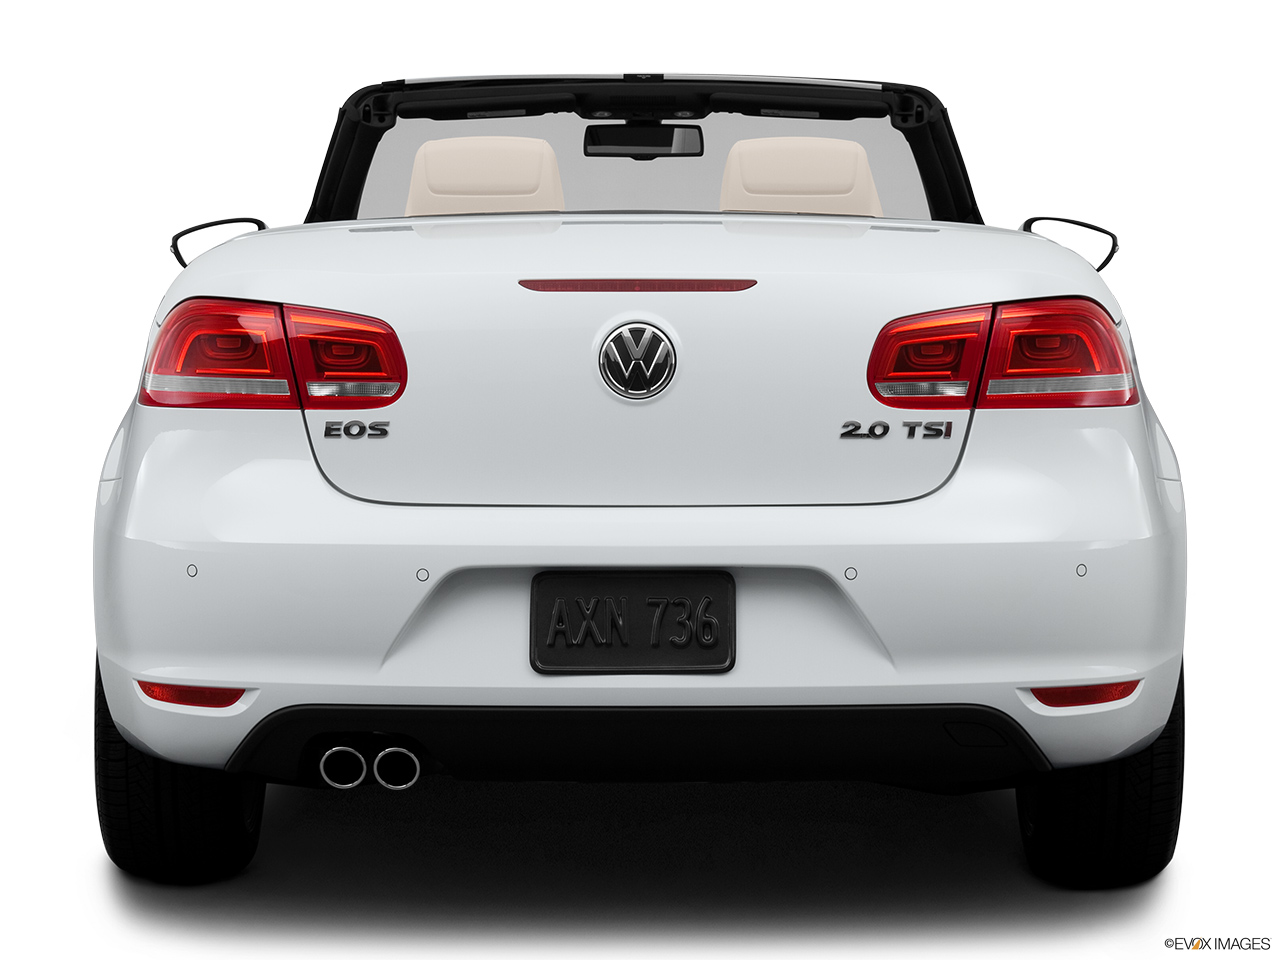 2013 Volkswagen Eos Lux Low/wide rear. 